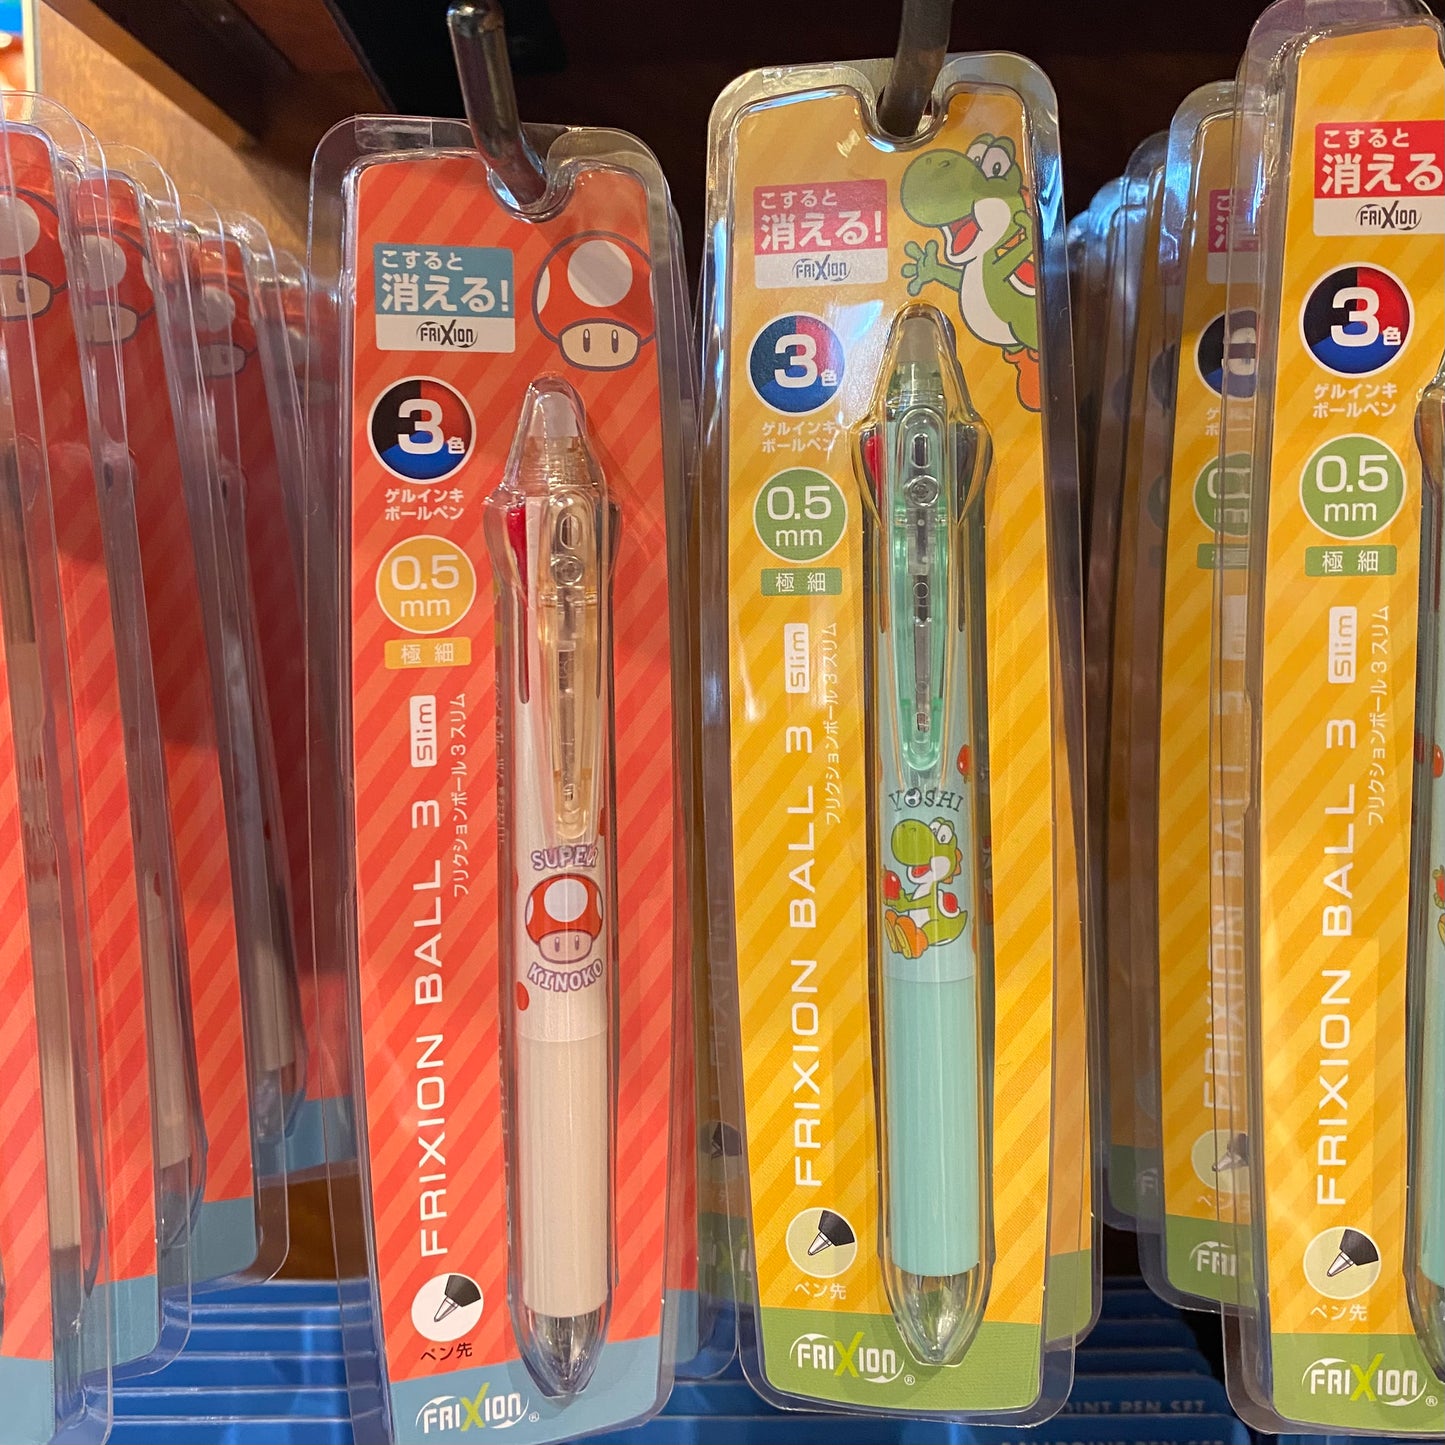 【Order】USJ Mario Pilot Frixon Ball 3 Slim Eraser Pen